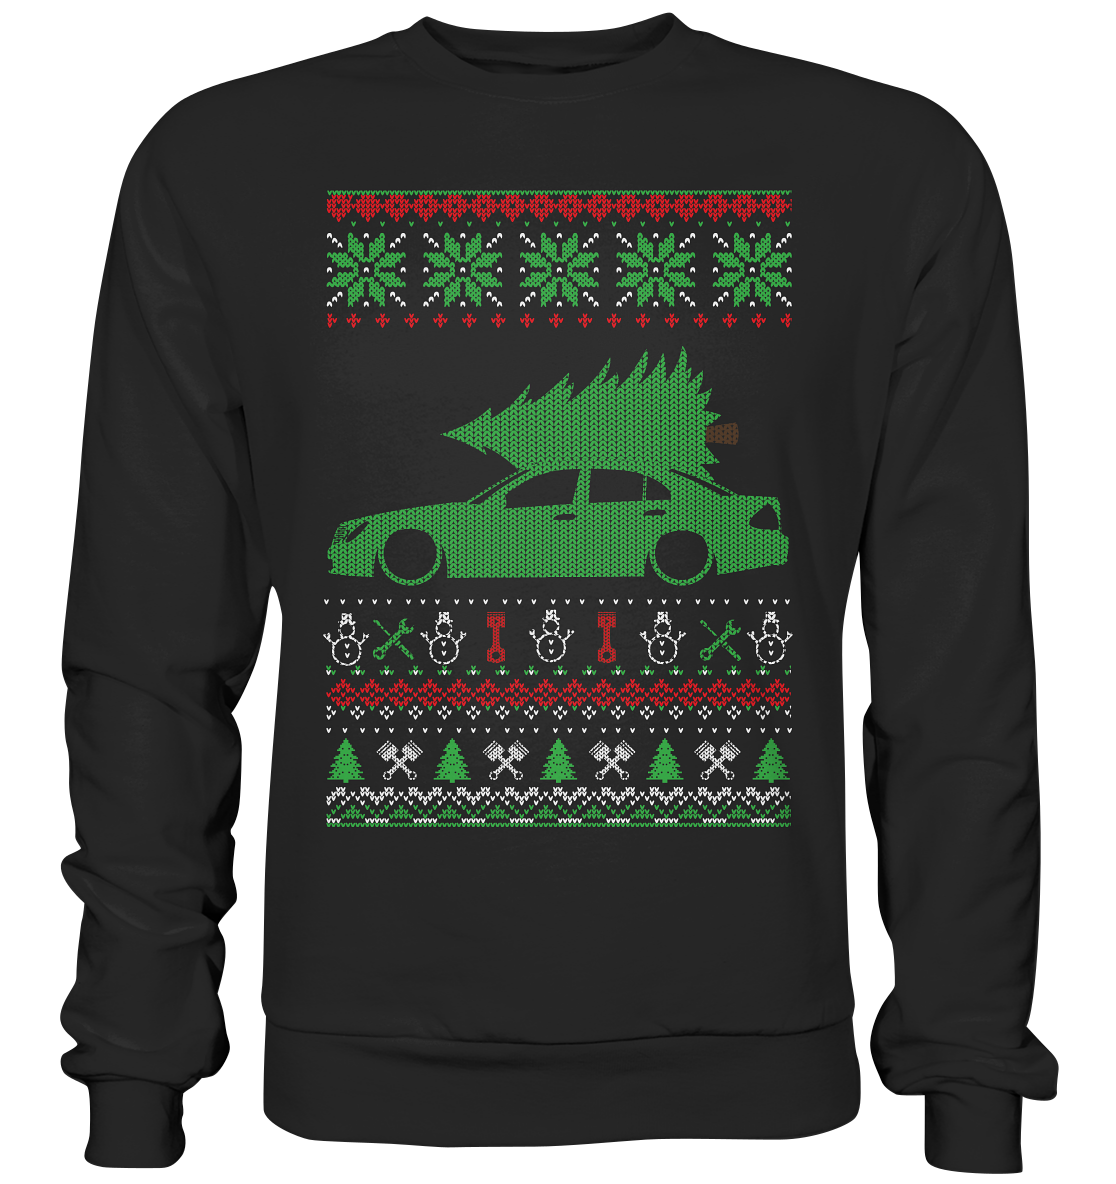 CODUGLY_MGKW211 - Premium Sweatshirt